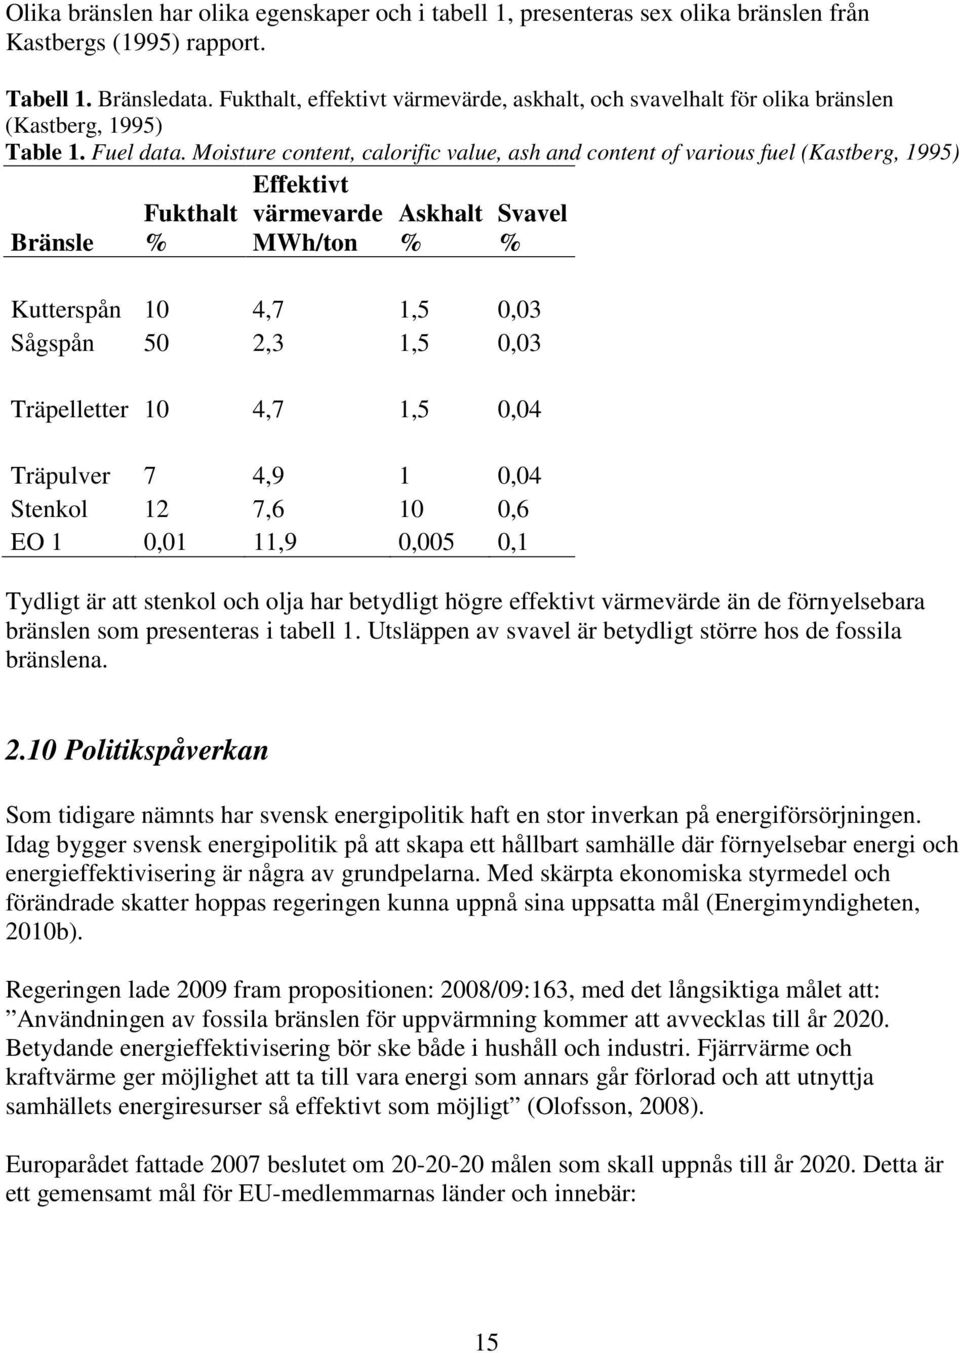 Moisture content, calorific value, ash and content of various fuel (Kastberg, 1995) Bränsle Fukthalt % Effektivt värmevarde MWh/ton Askhalt % Svavel % Kutterspån 10 4,7 1,5 0,03 Sågspån 50 2,3 1,5